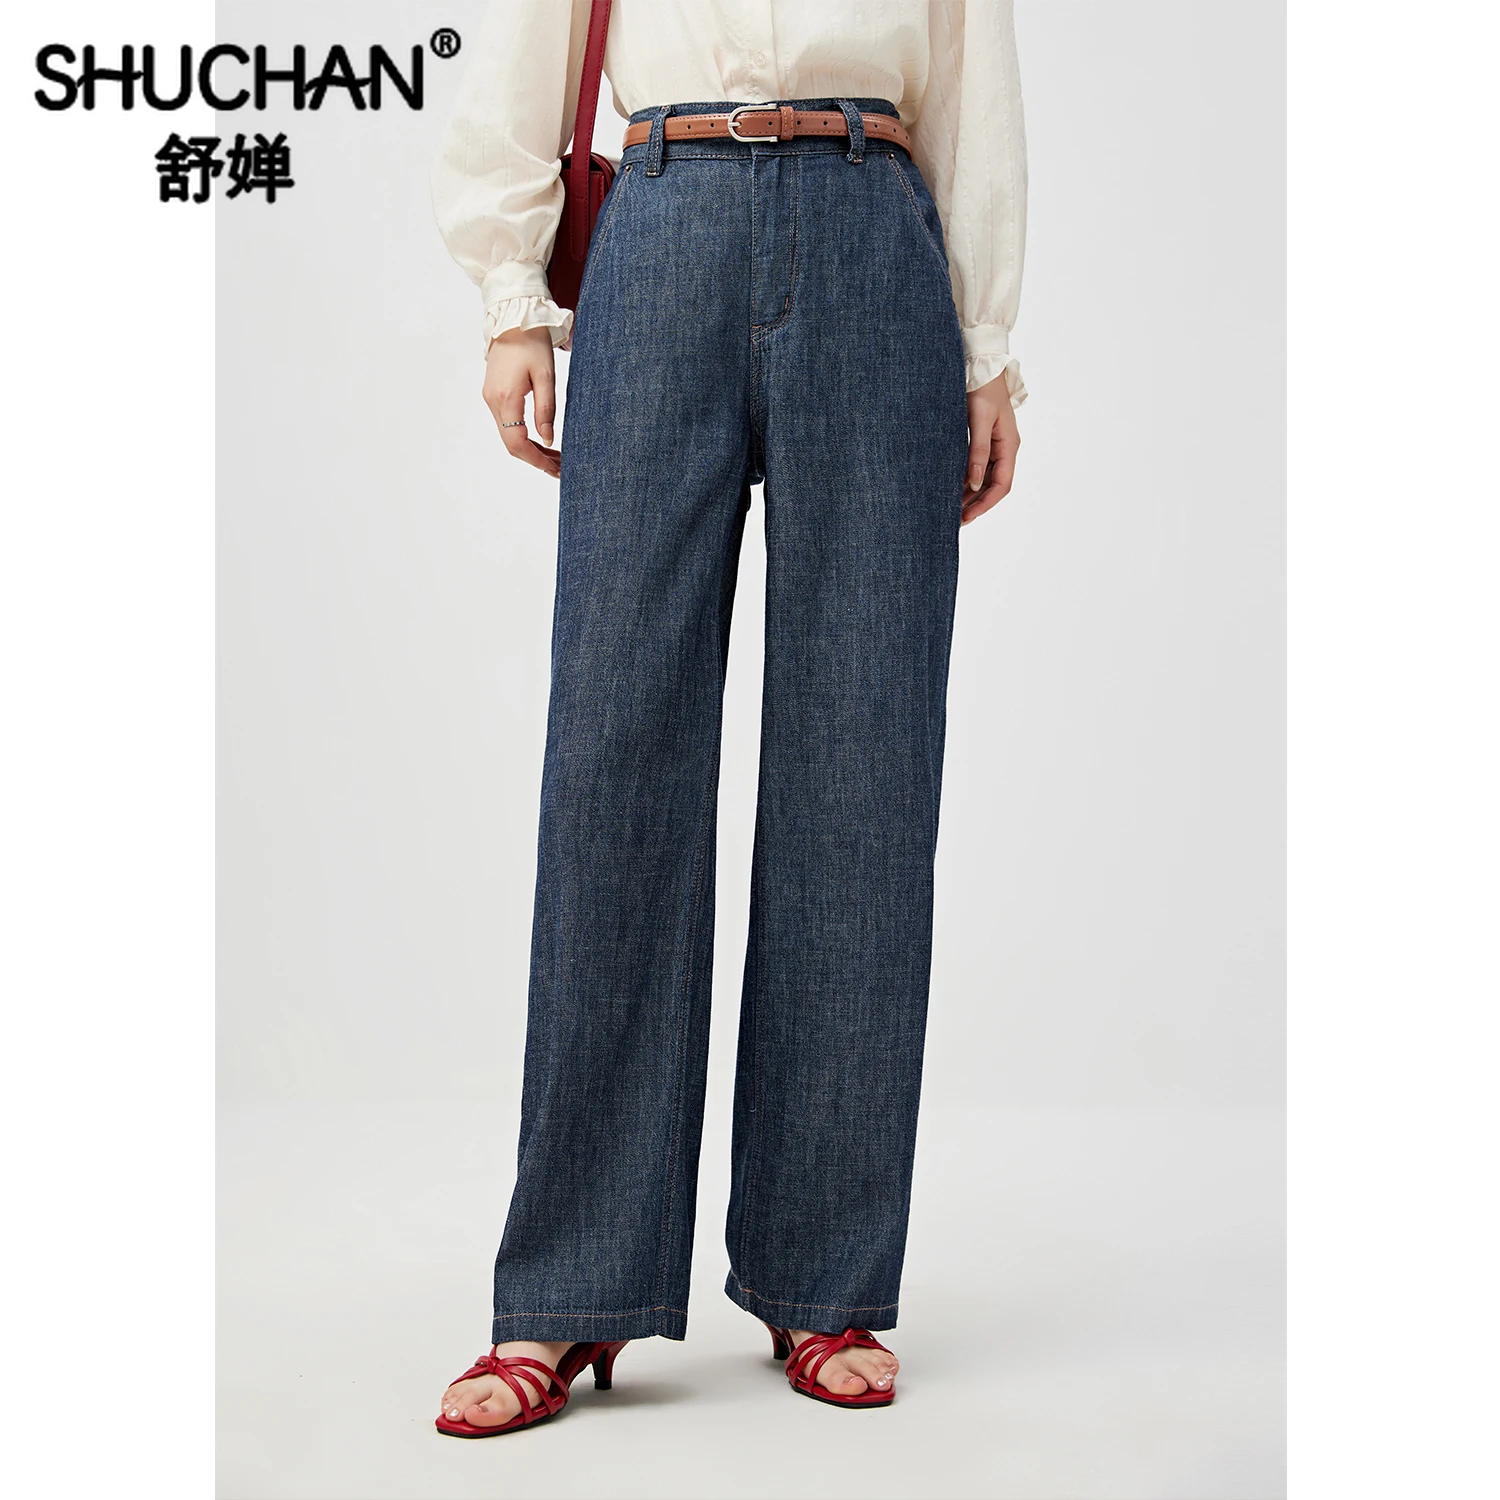 

SHUCHAN Cotton Linen Women High Waist Jeans Full Length STRAIGHT Casual Pantalon Pour Femme Jeans Women